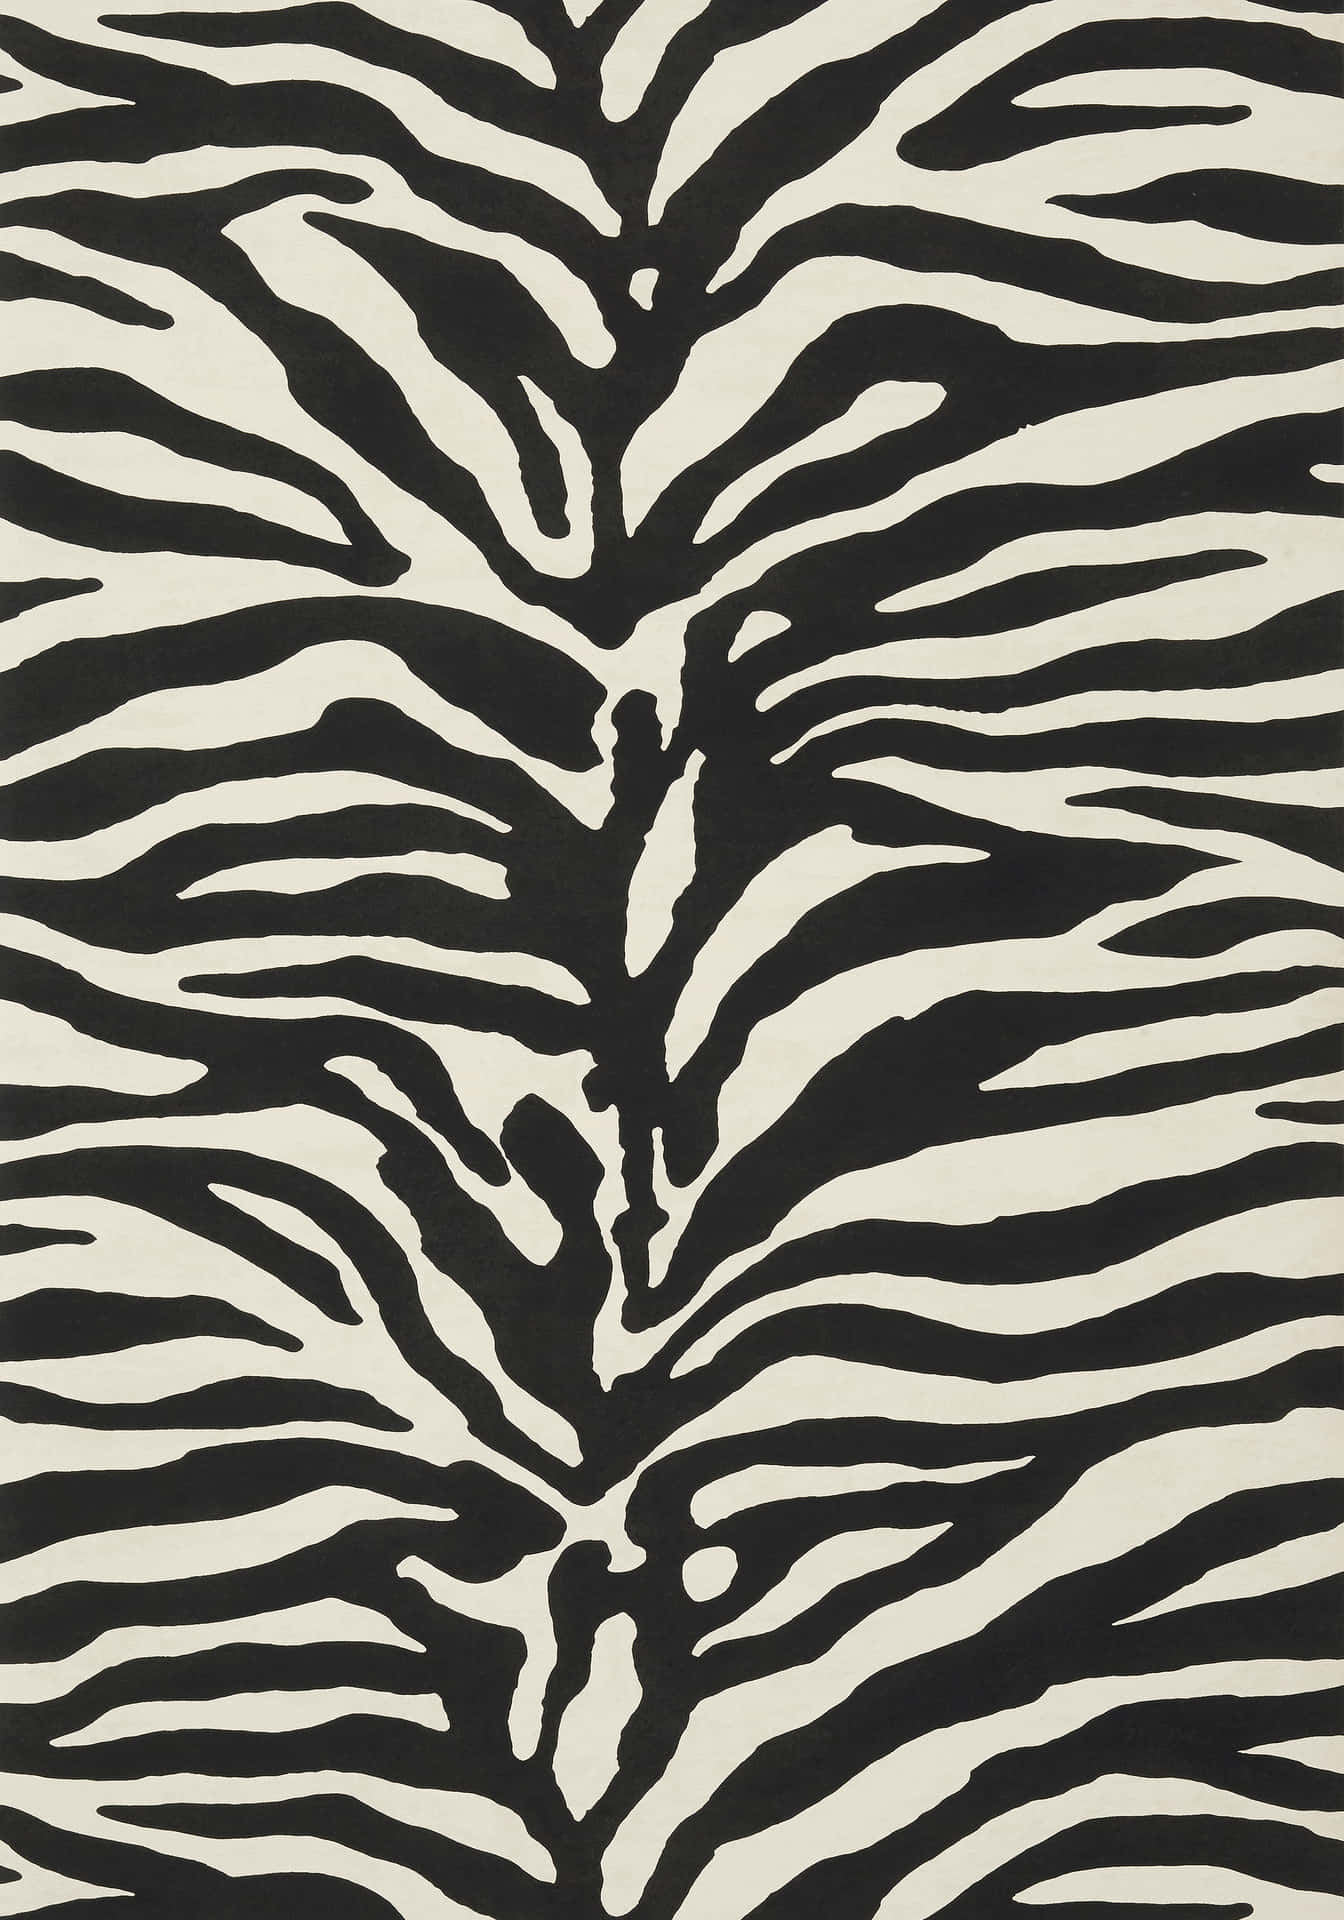 An Eye-Catching Black and White Animal Print Wallpaper Wallpaper